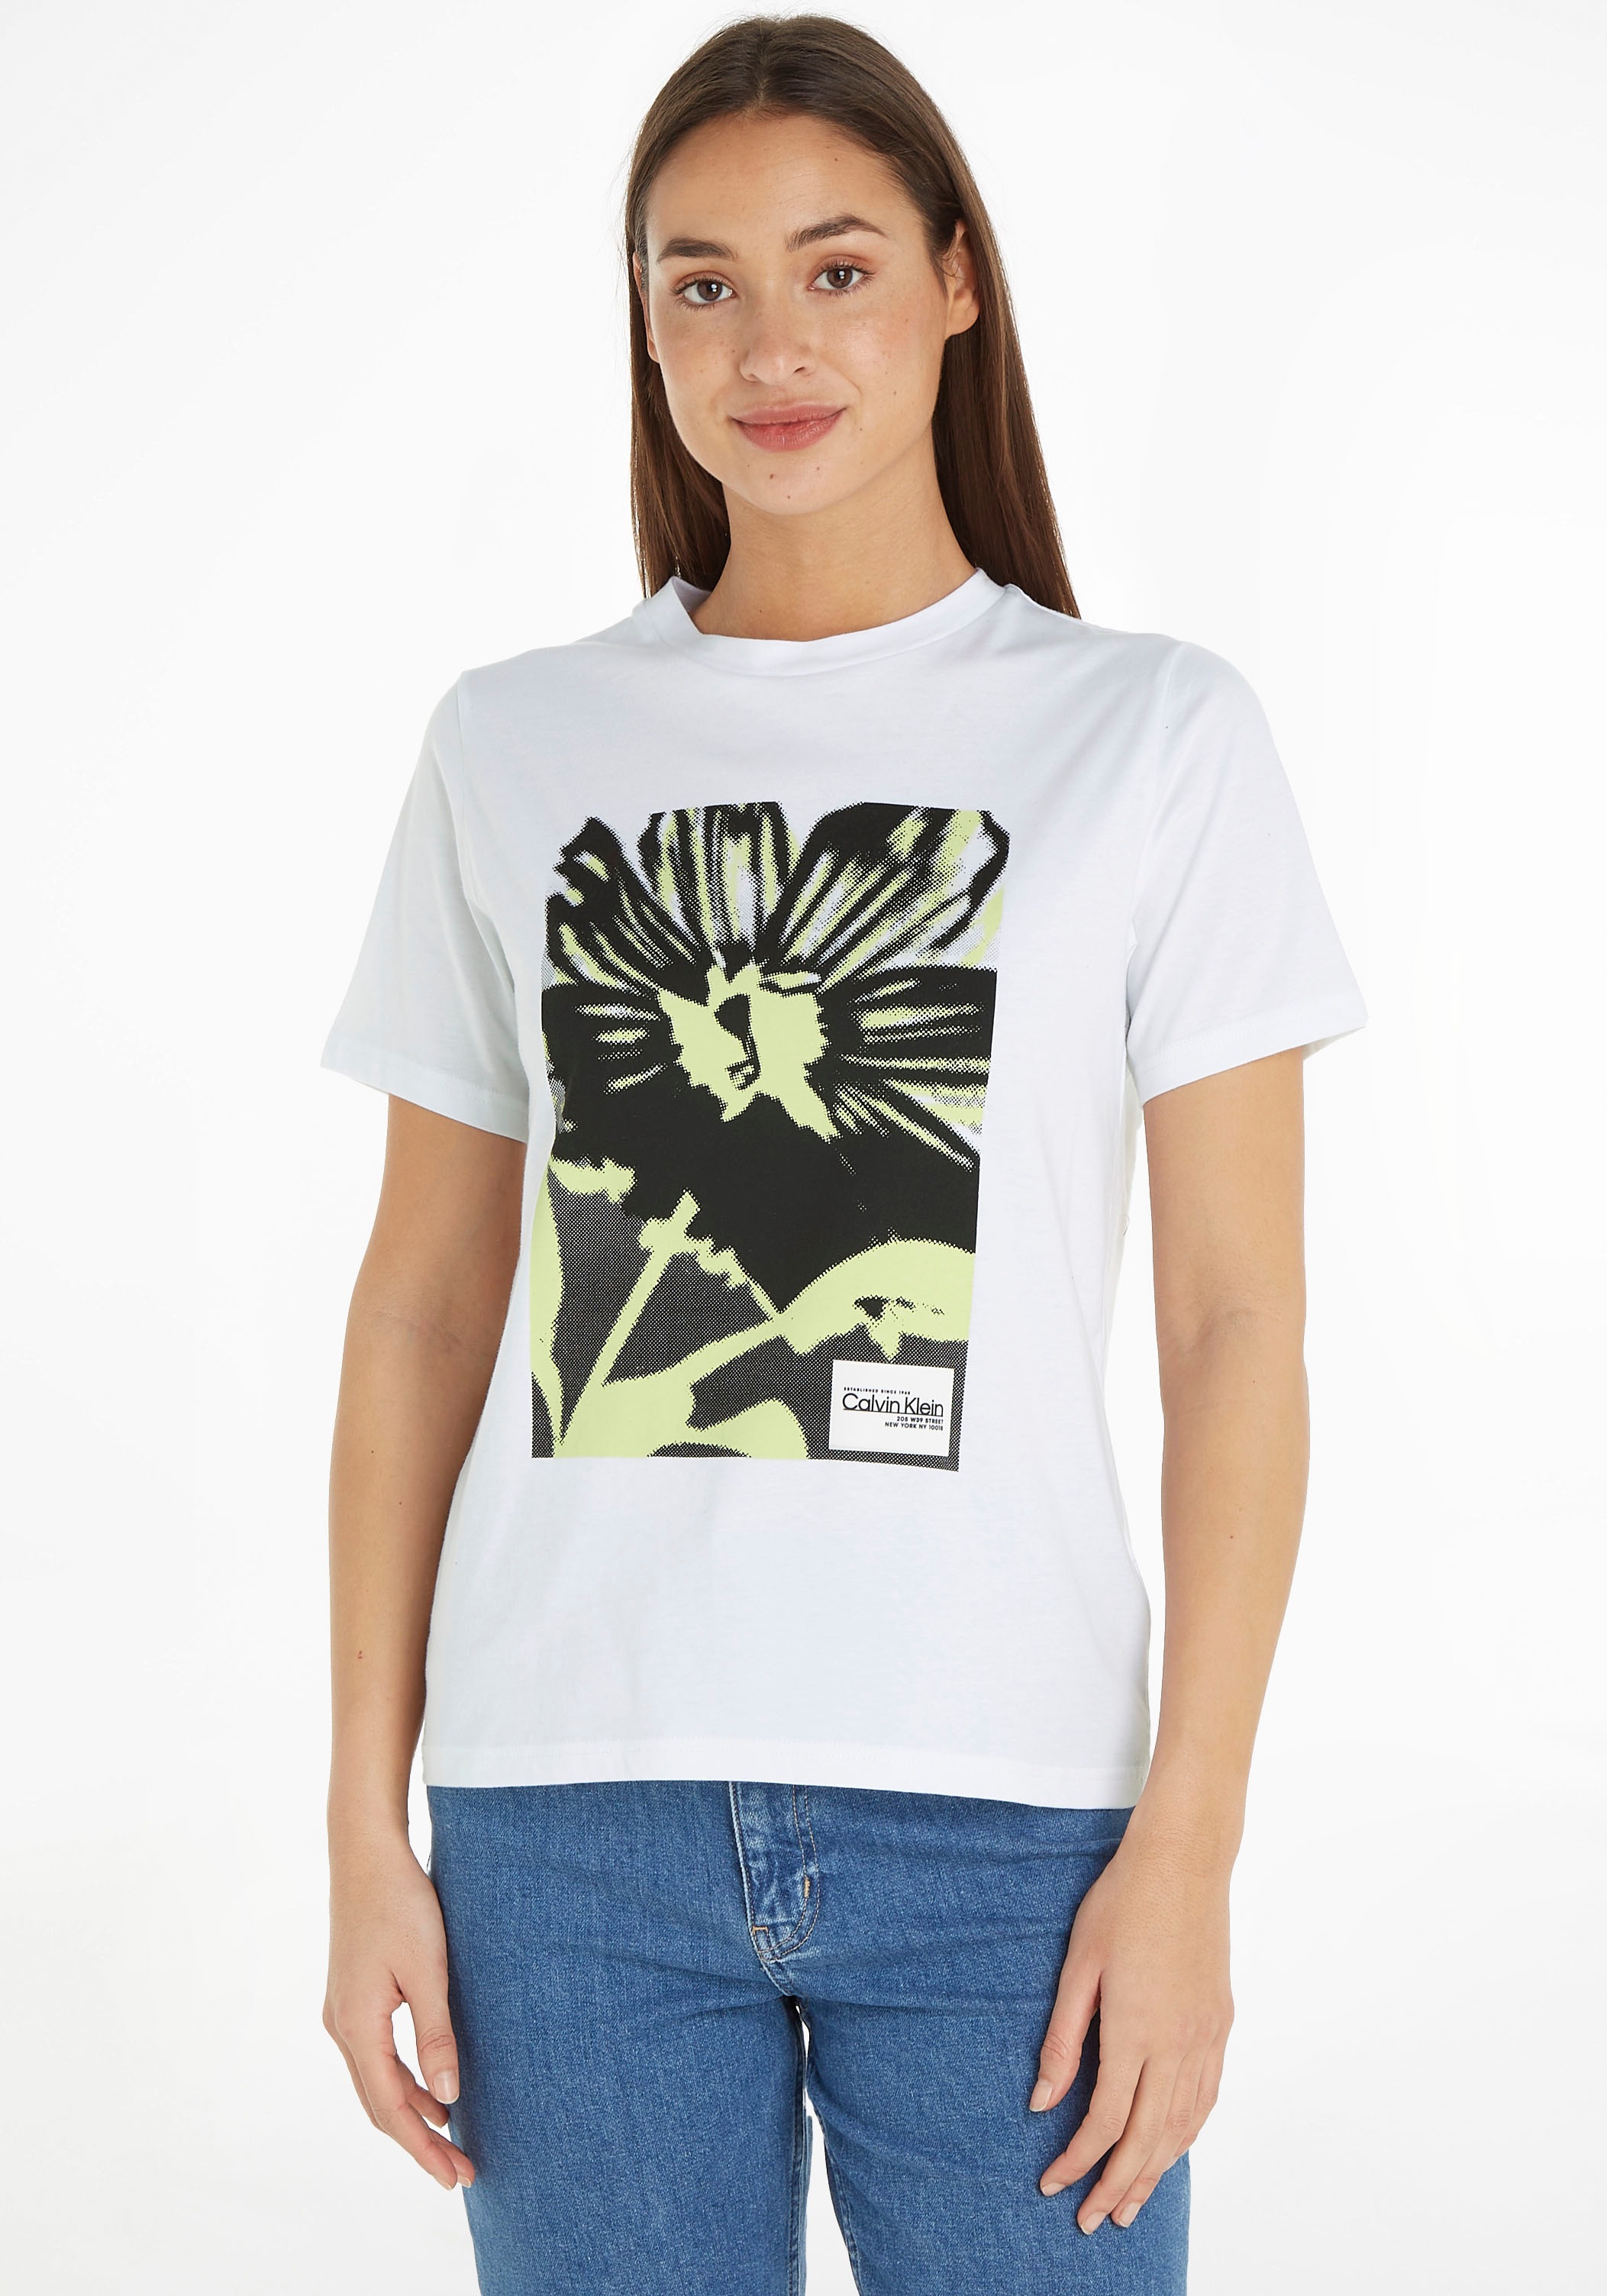 Klein confortablement Calvin mit Floral-Printmuster T-Shirt, Acheter